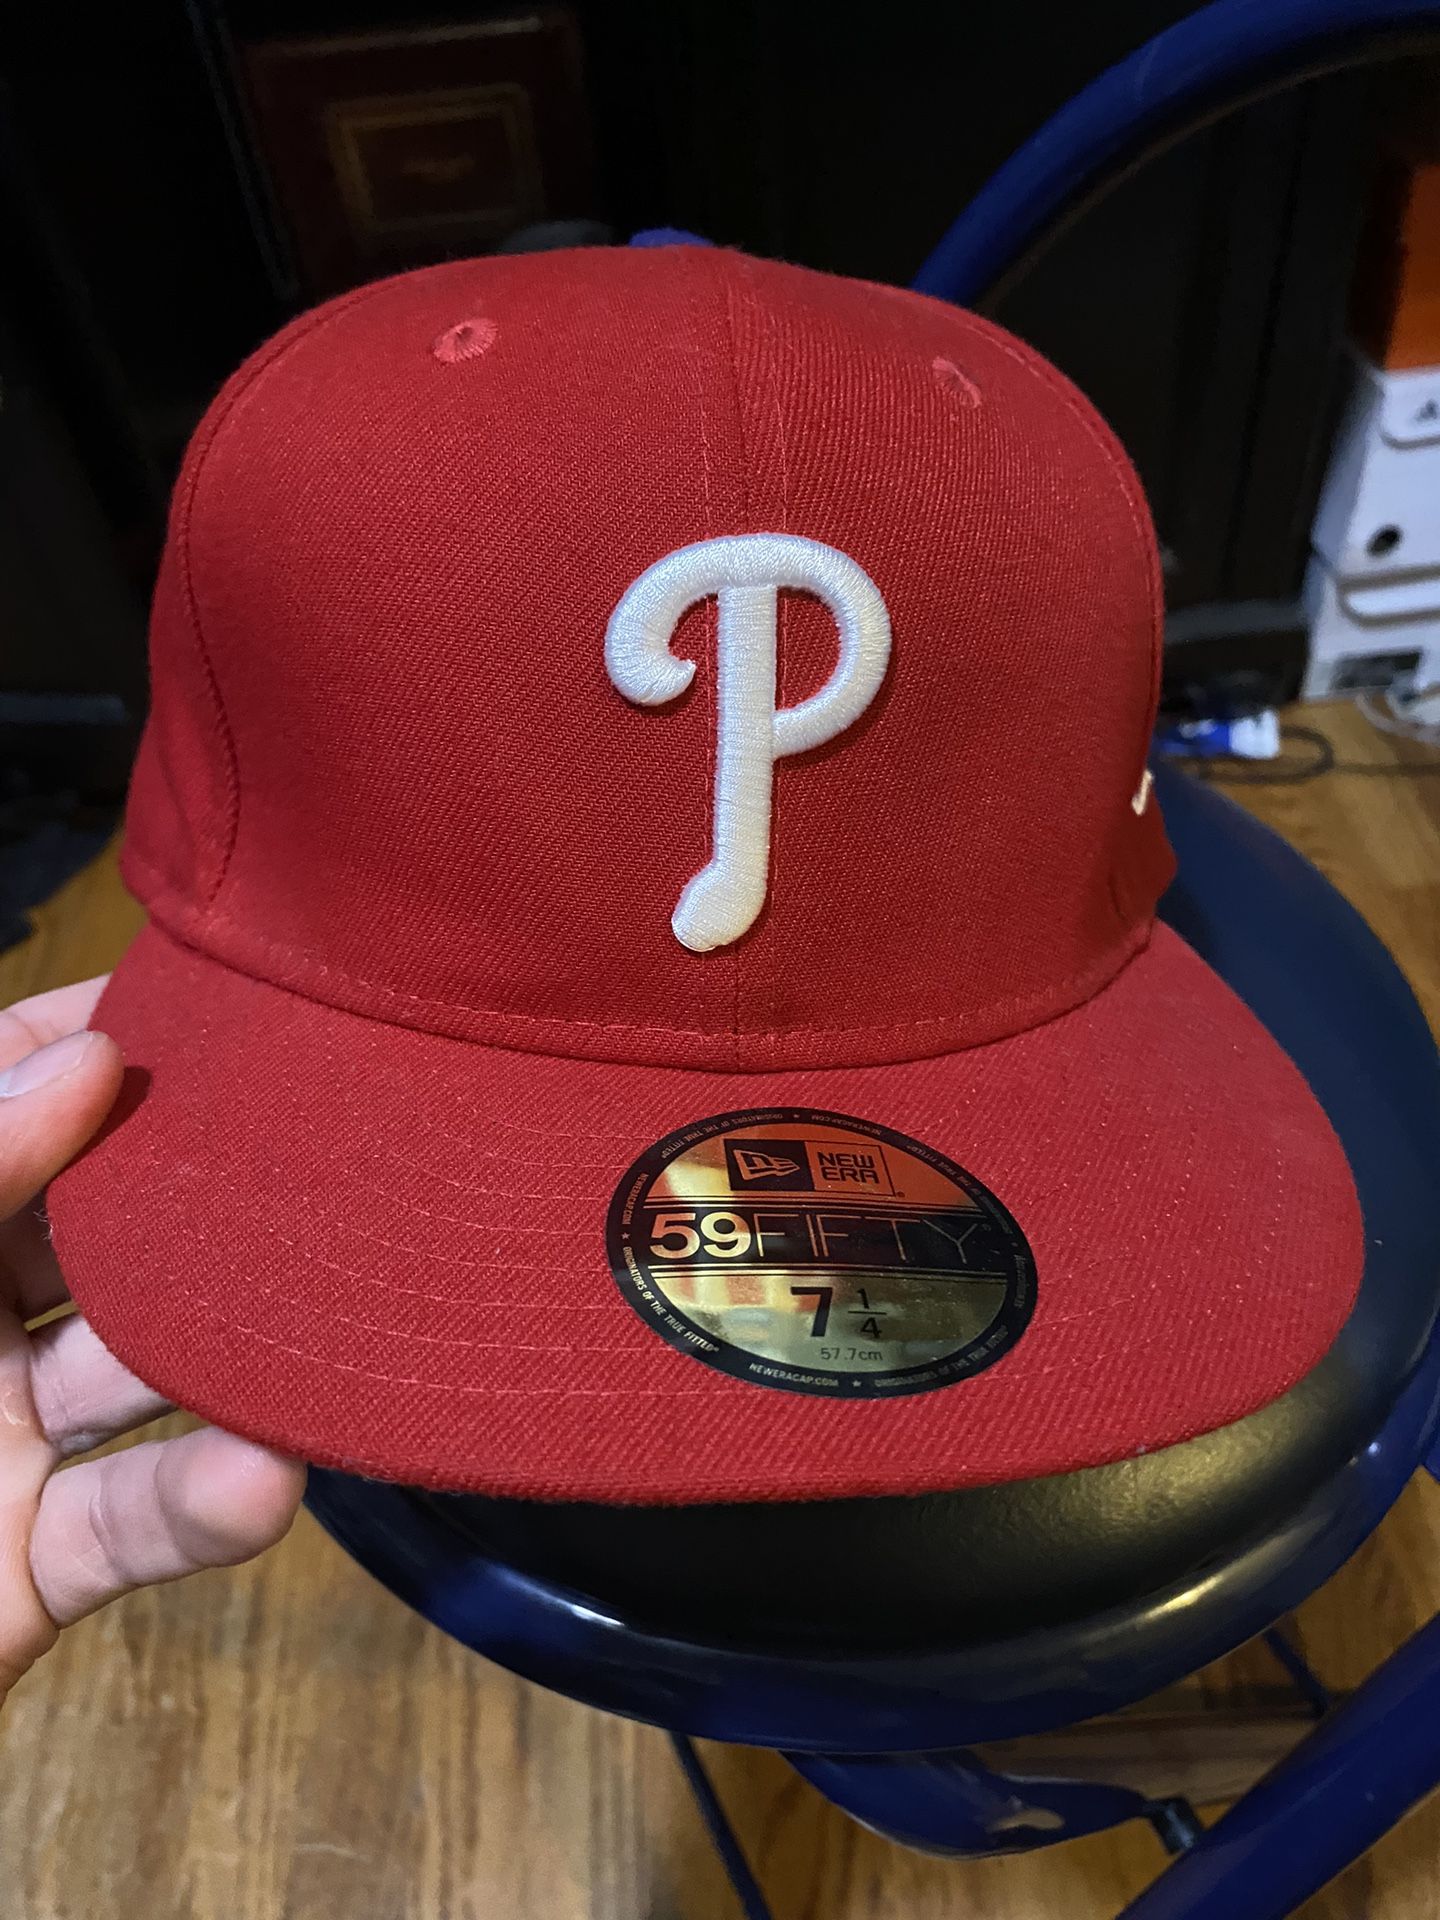 Phillies baseball cap